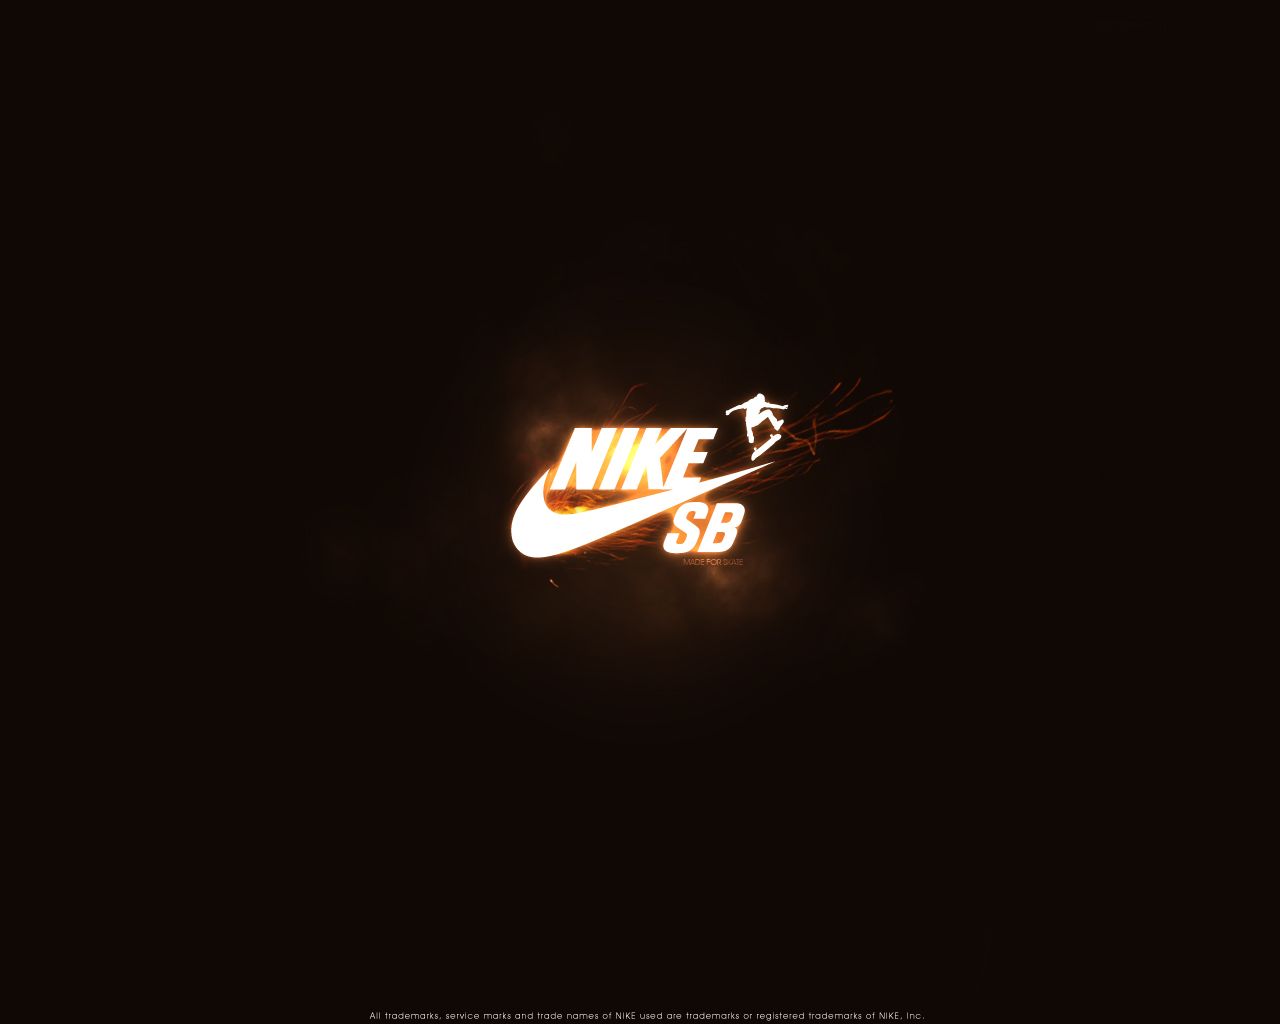 Nike SB Wallpaper for iPhone